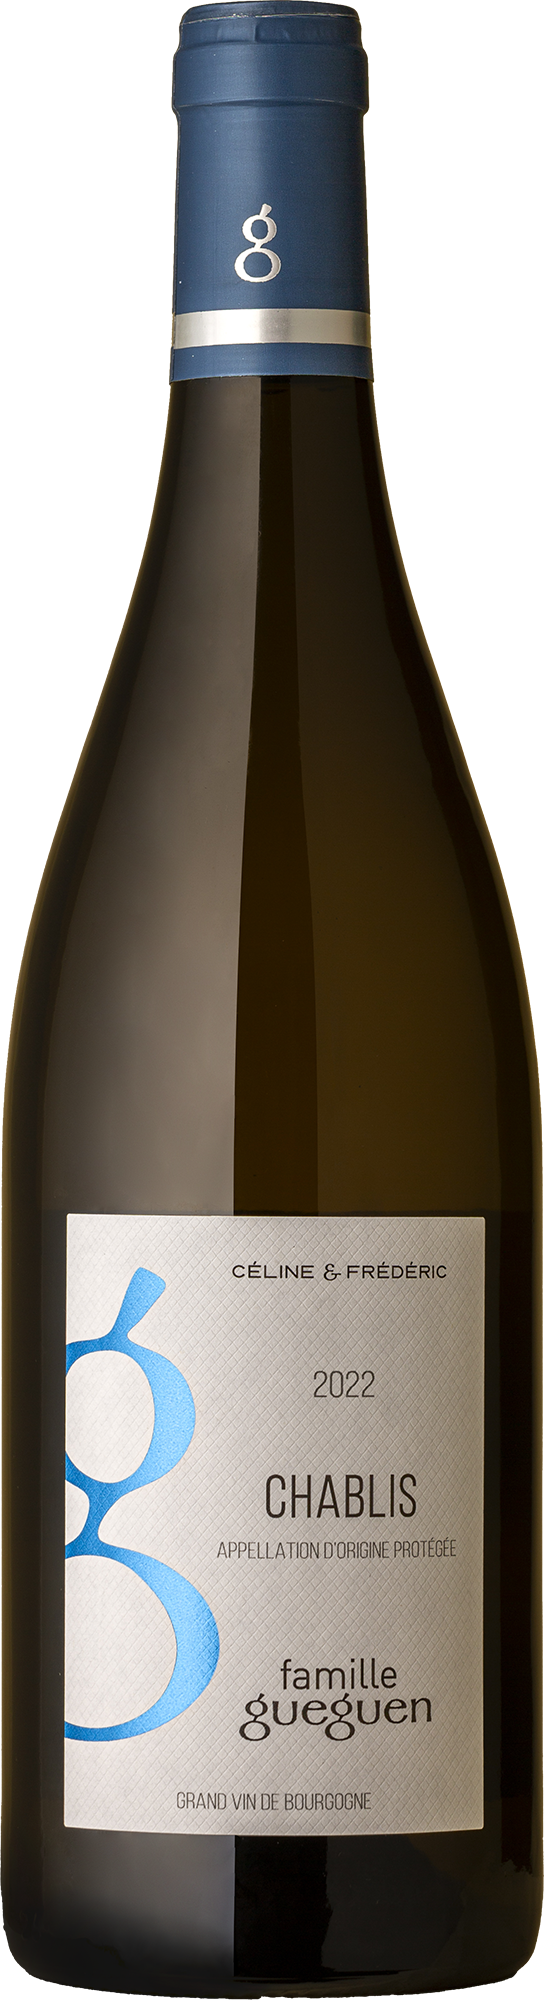 Domaine Gueguen - Chablis Chardonnay 2022 White Wine